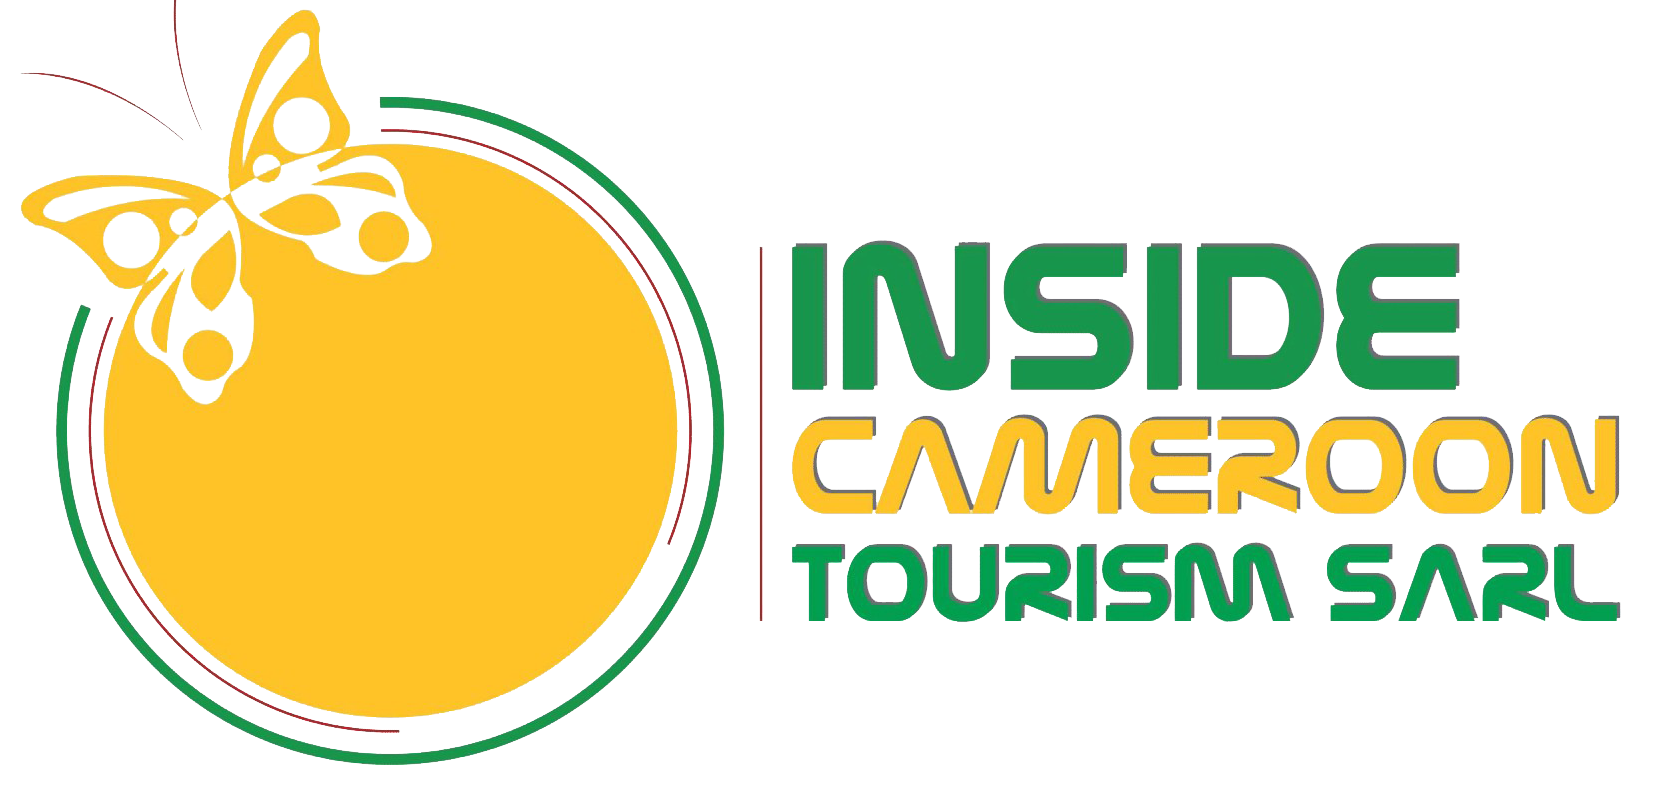 INSIDE CAMEROON TOURISM 